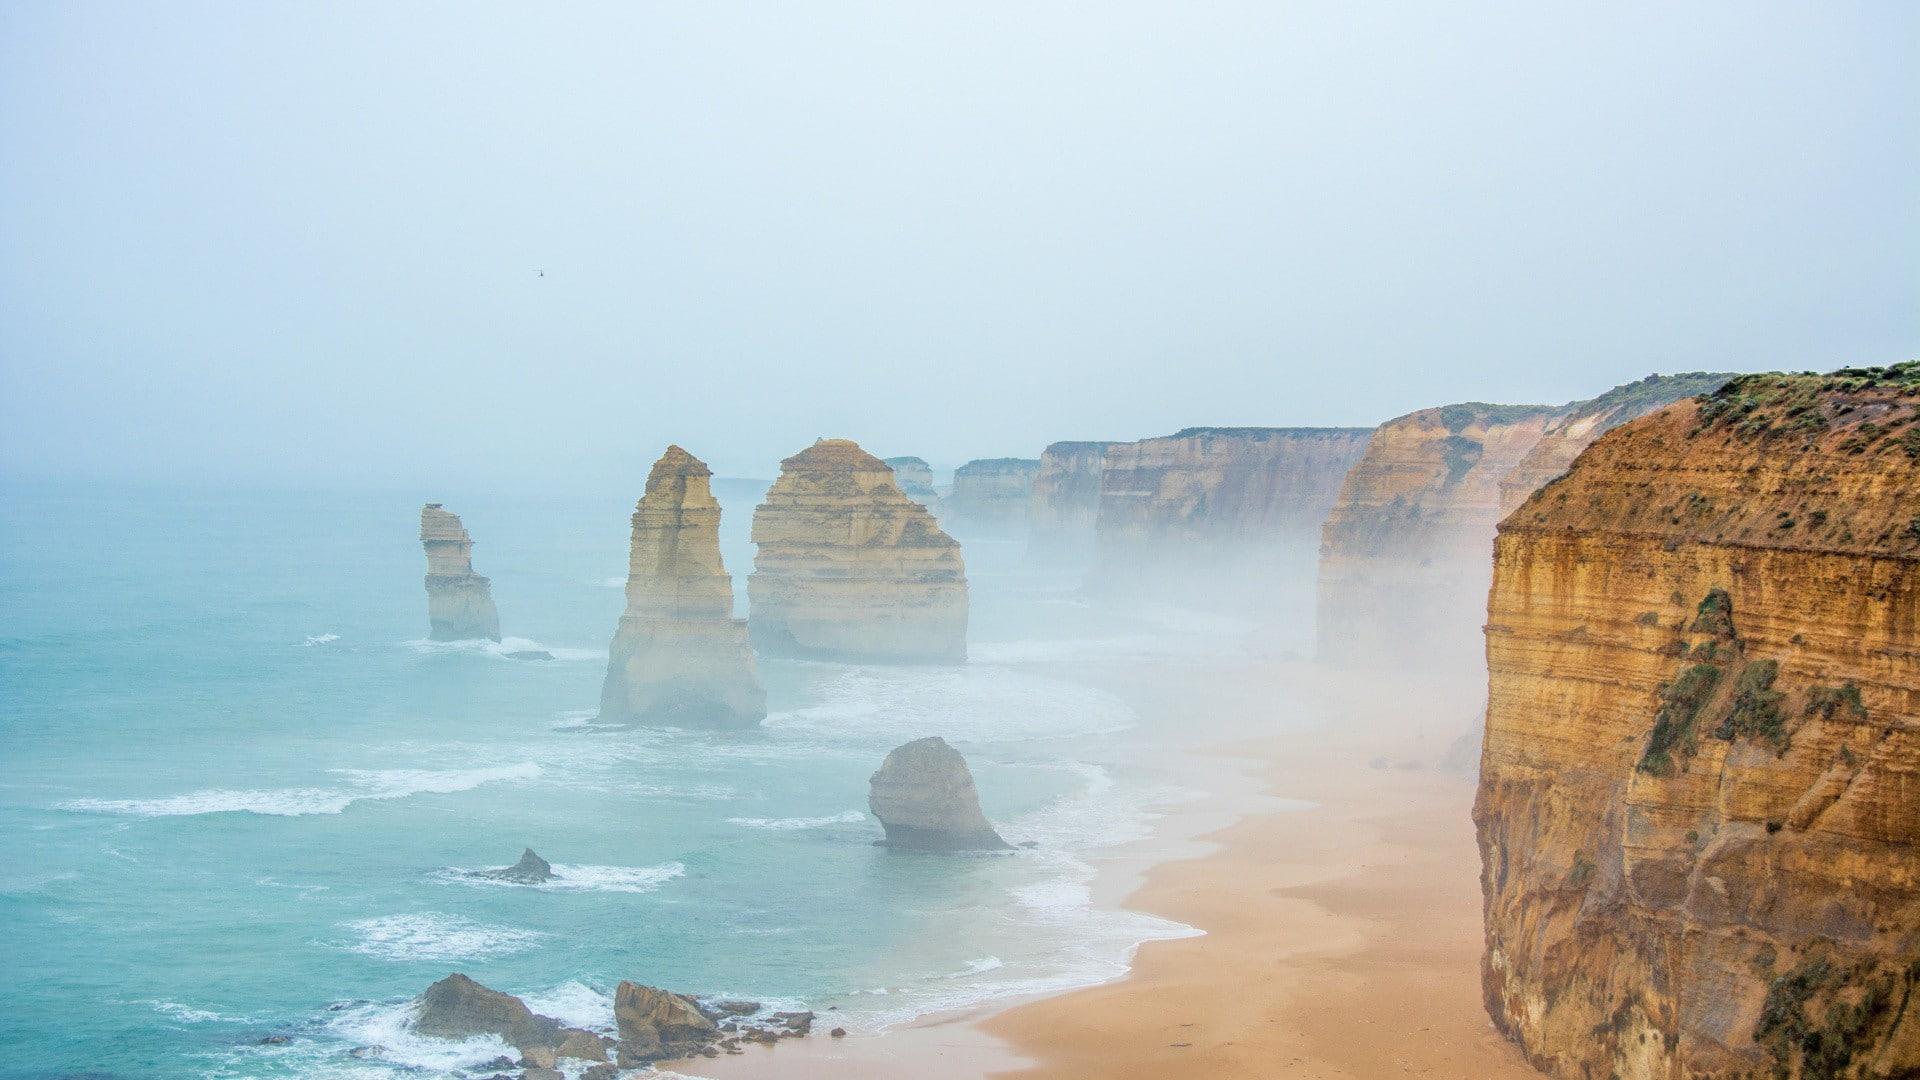 12 apostles, Australia, water, rocks, sand, mist, cliffs, sea